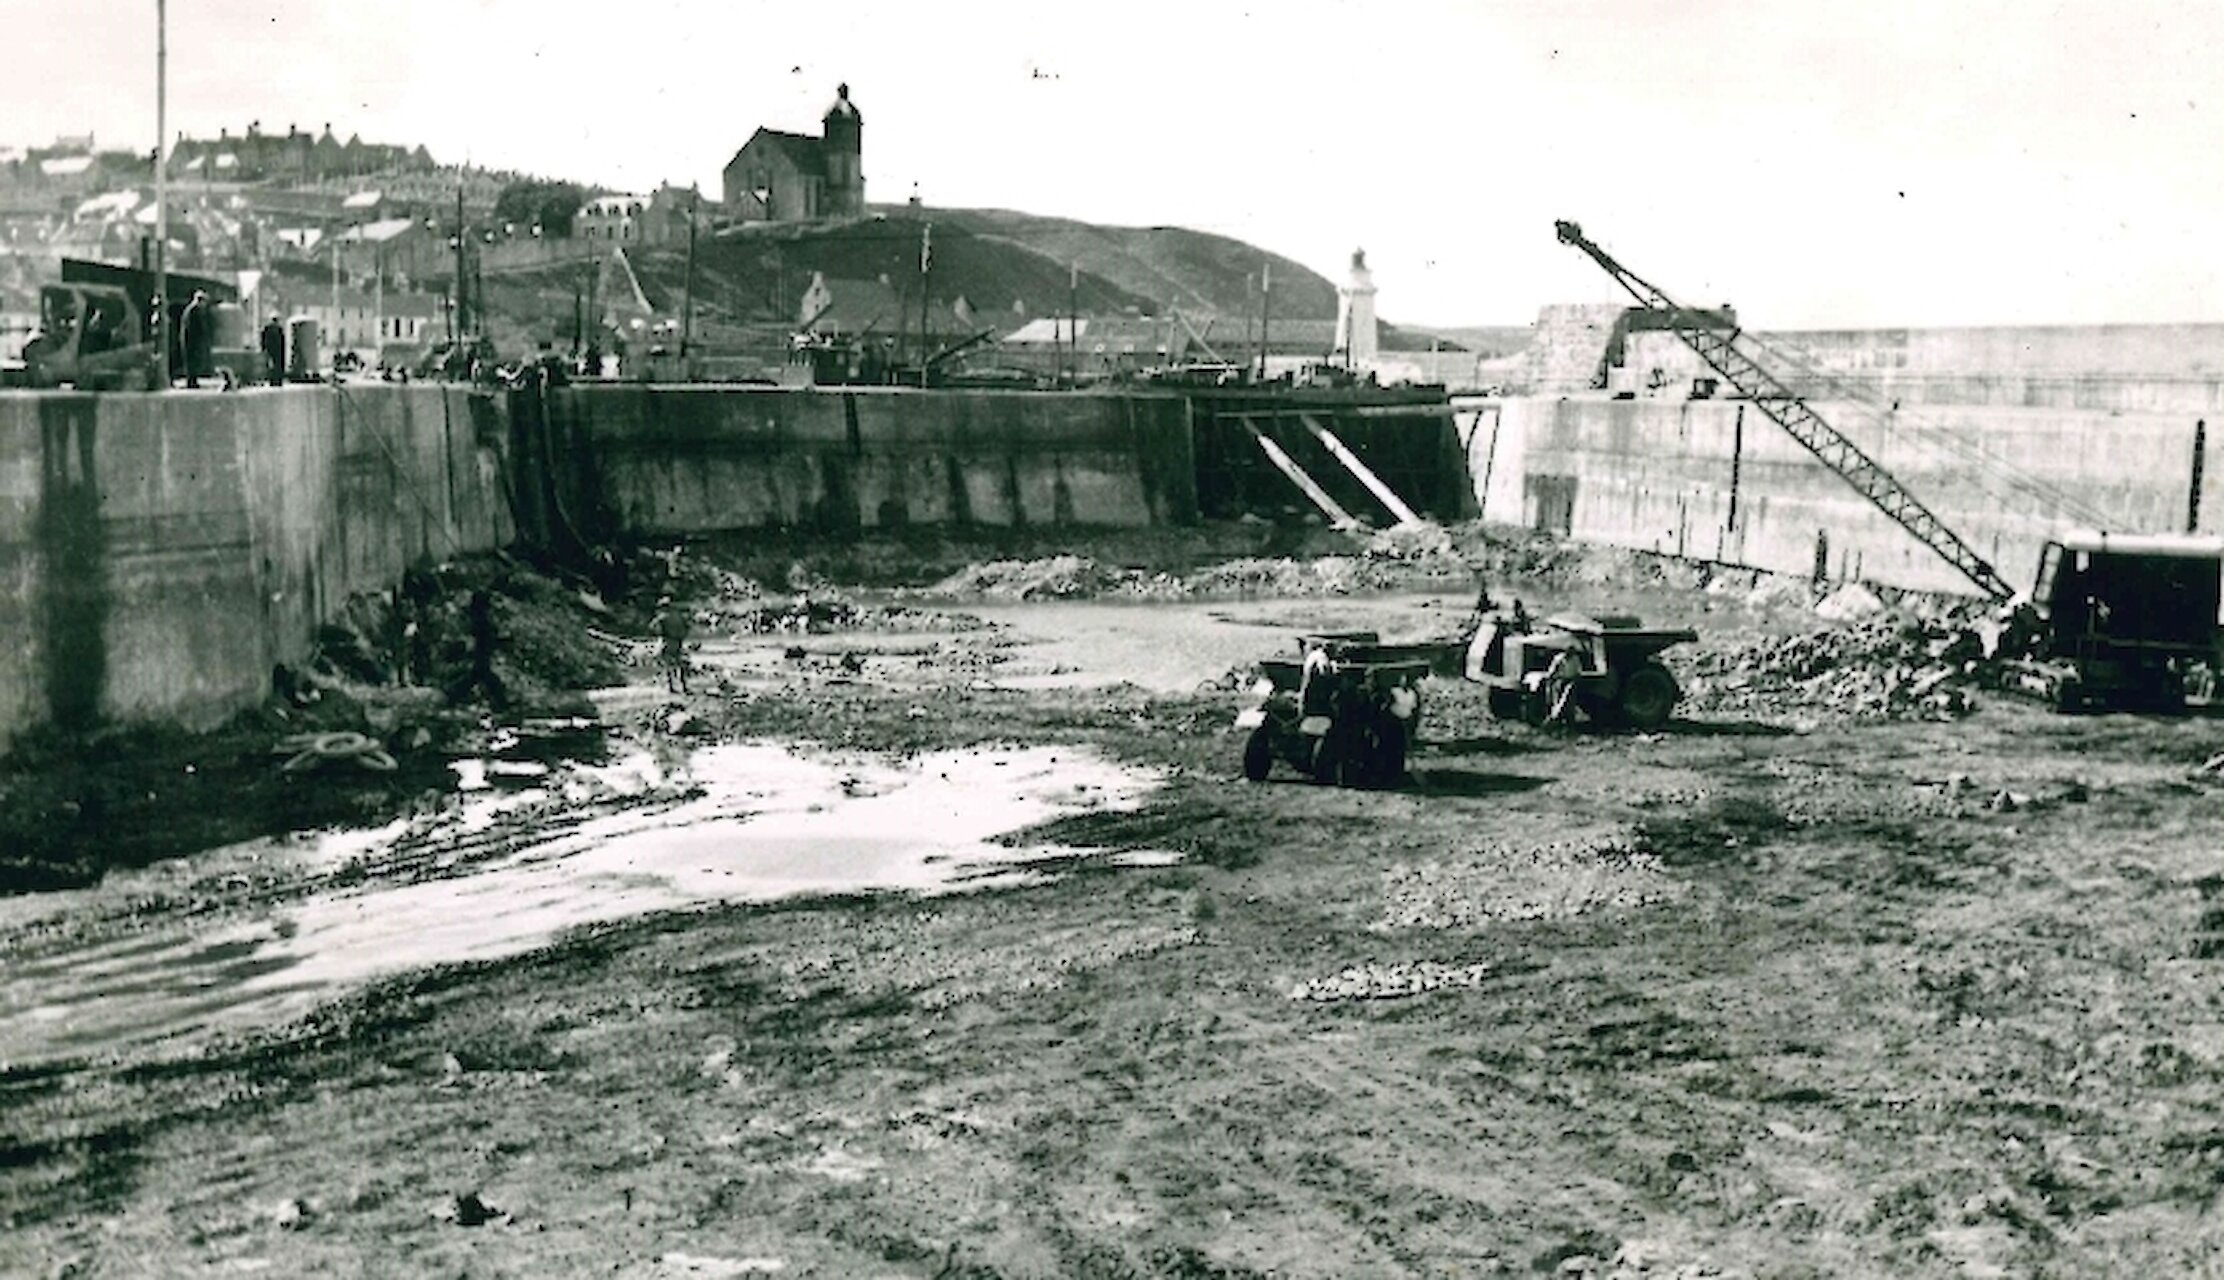 Macduff Harbour deepening works